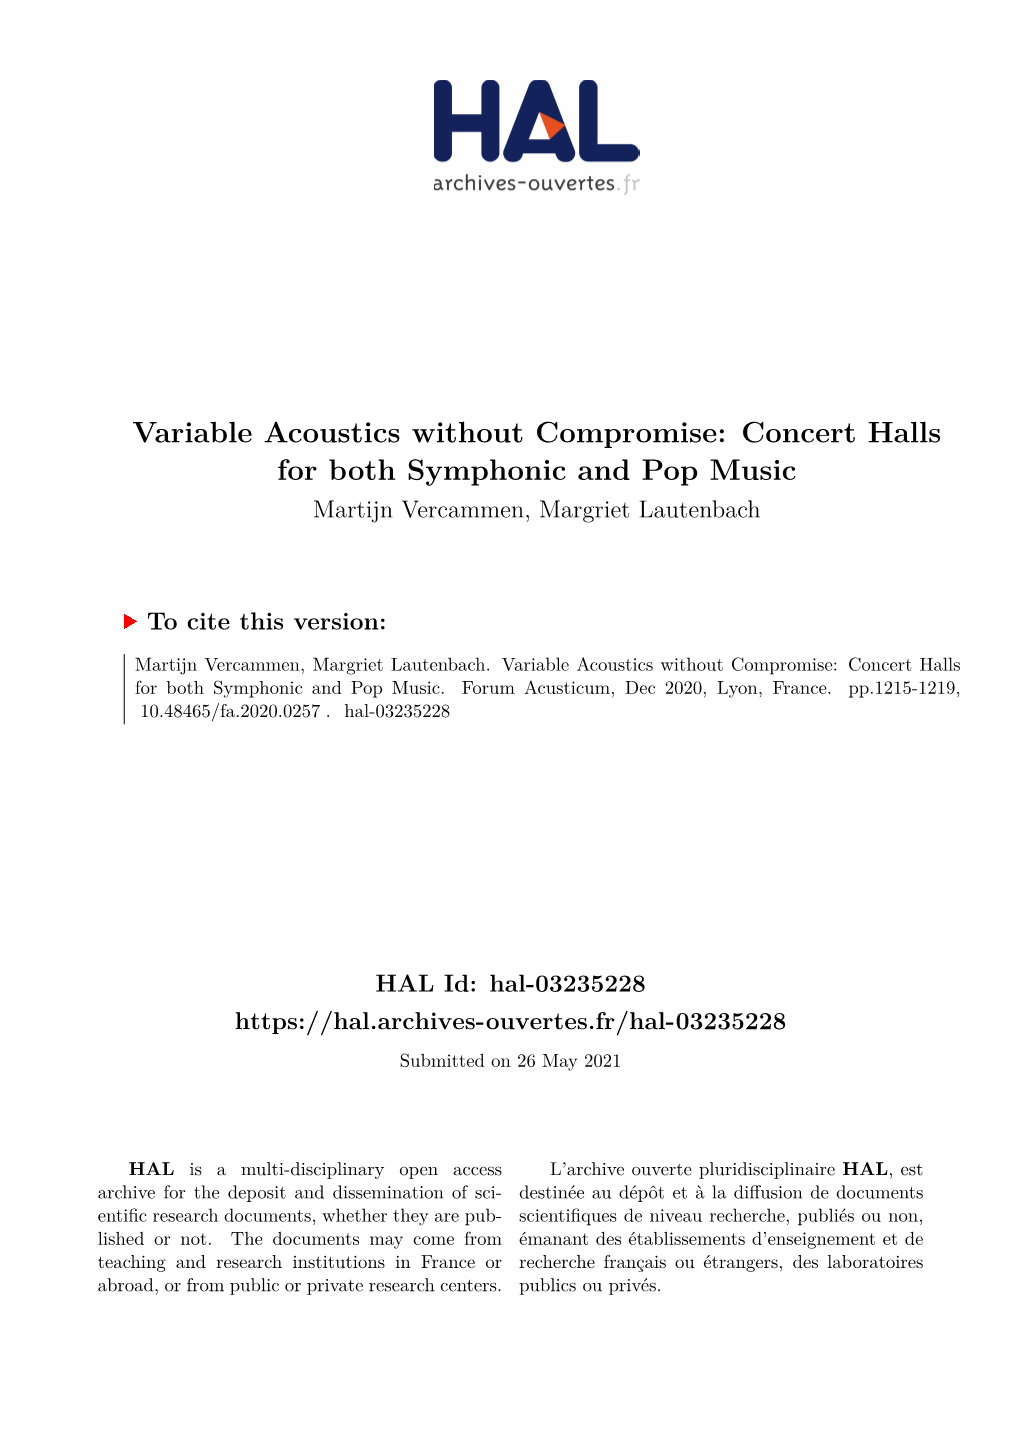 Concert Halls for Both Symphonic and Pop Music Martijn Vercammen, Margriet Lautenbach